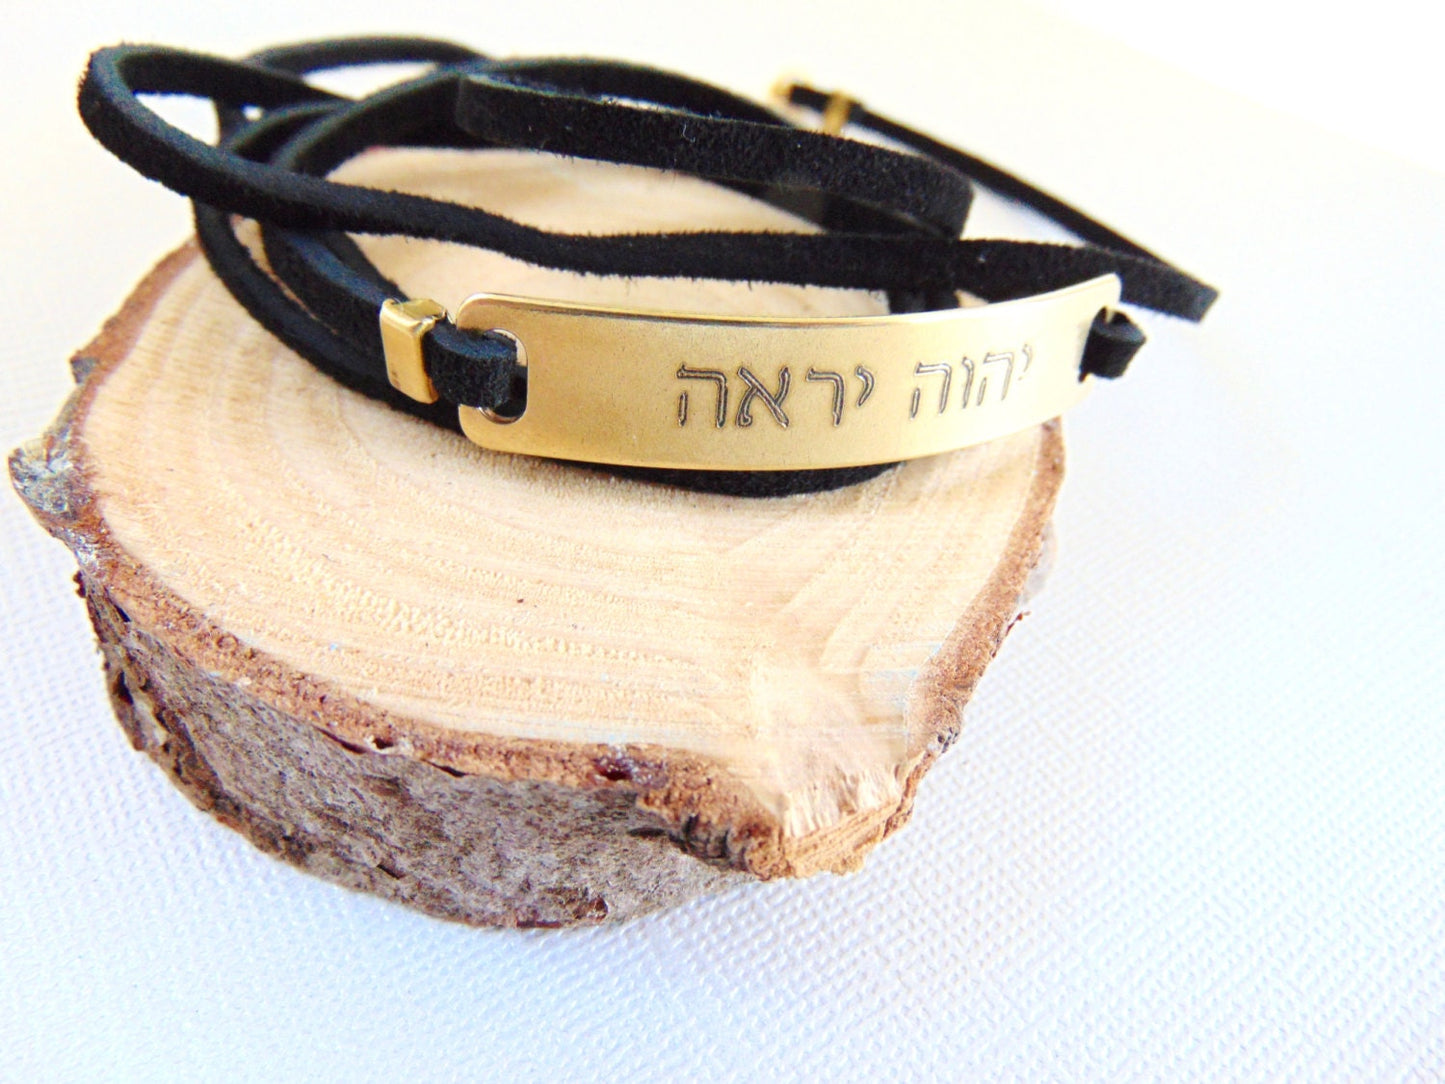 Black Leather wrap bracelet, Hebrew Quote engraving